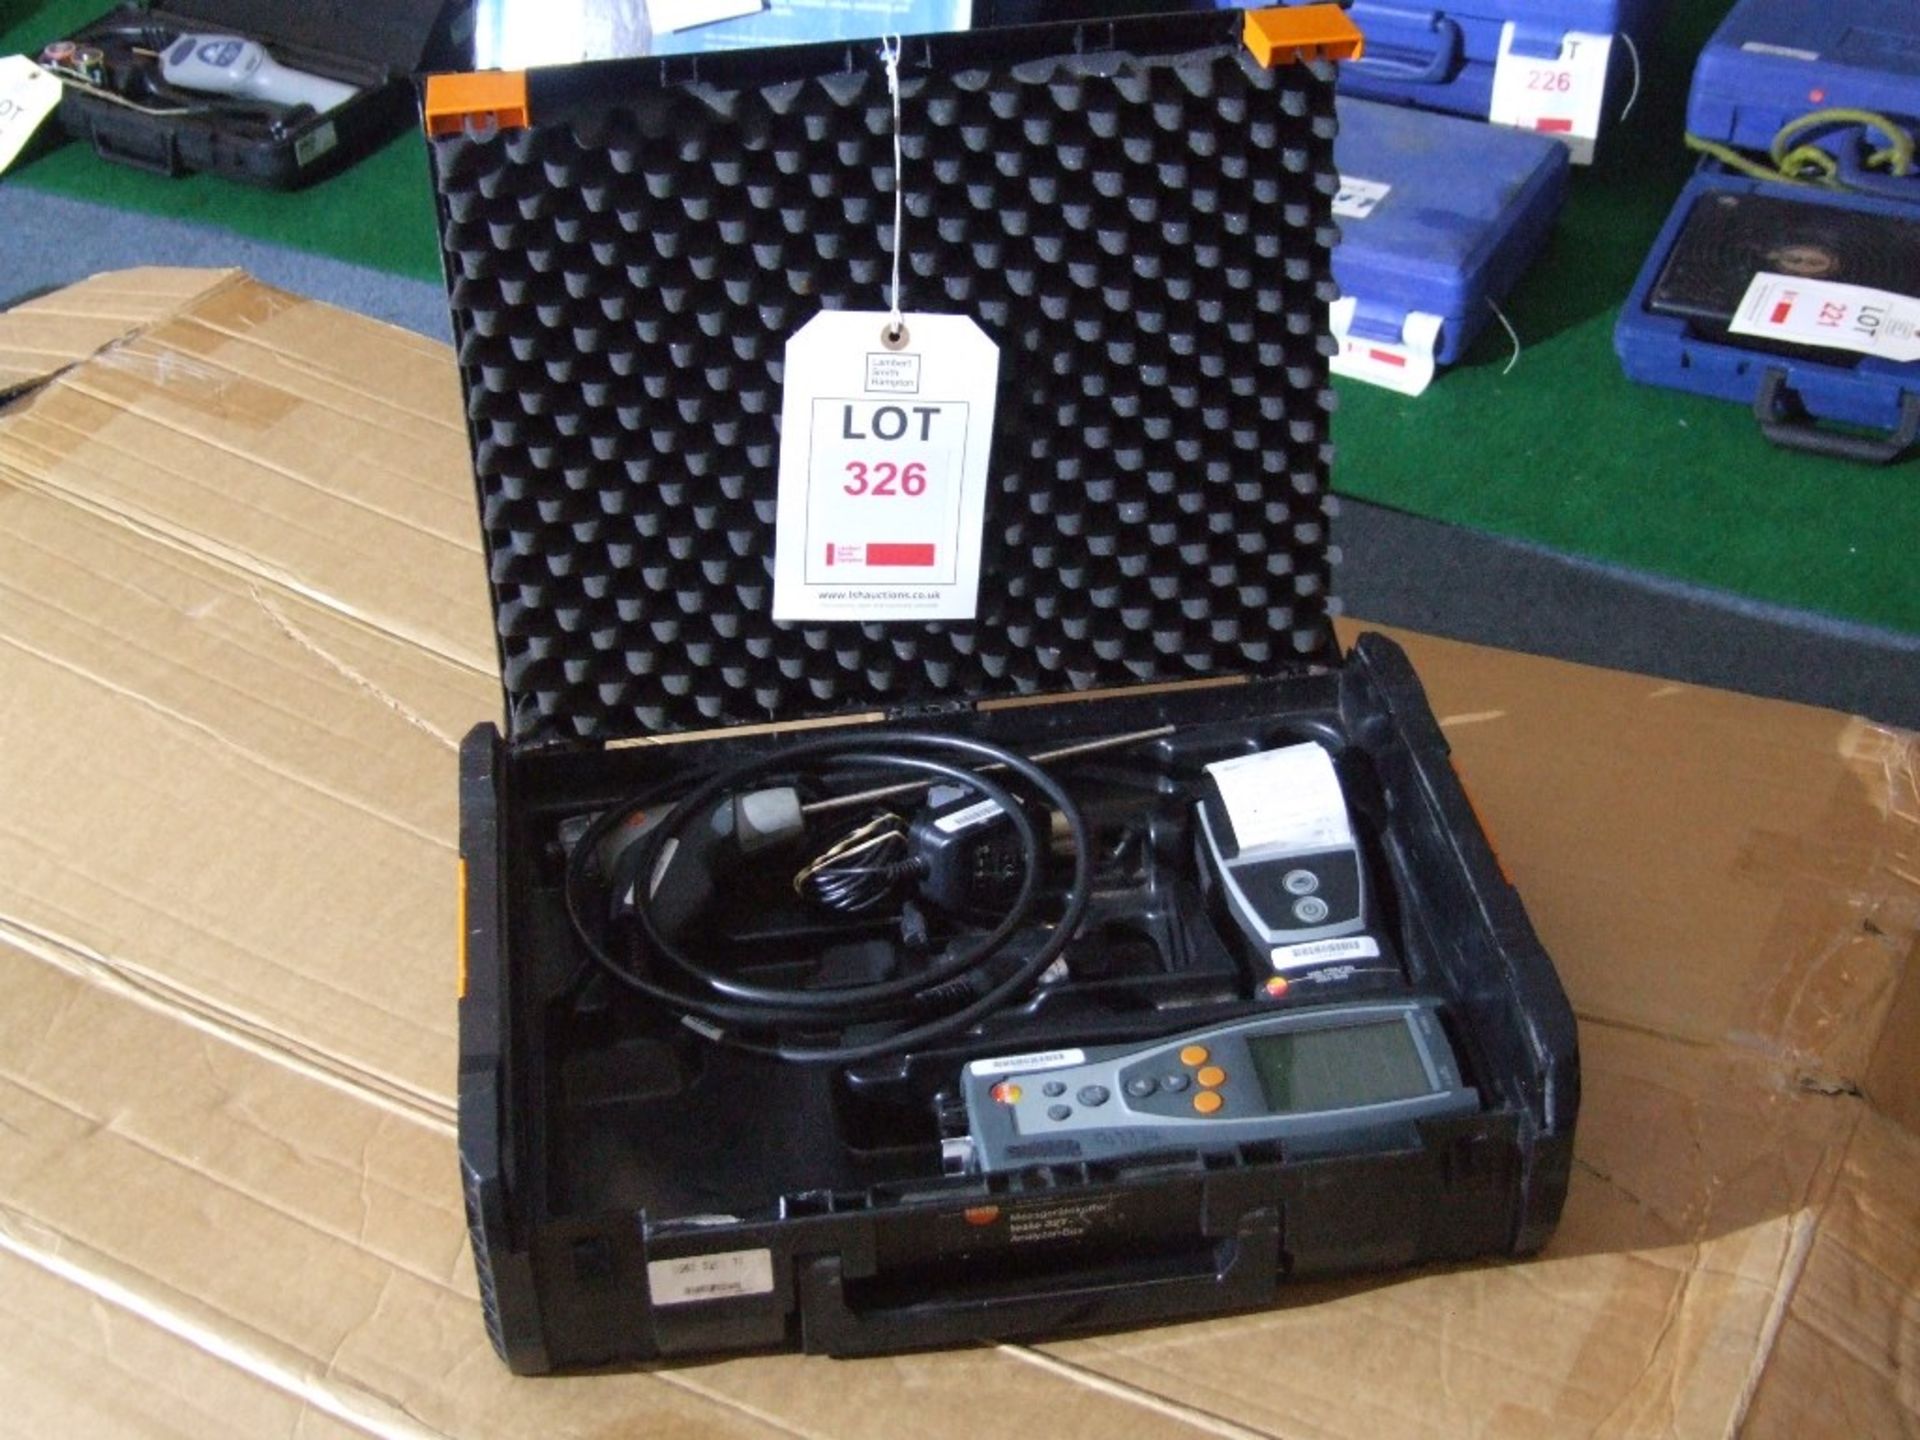 Testo 327-1 Flue Gas Analyser with Printer